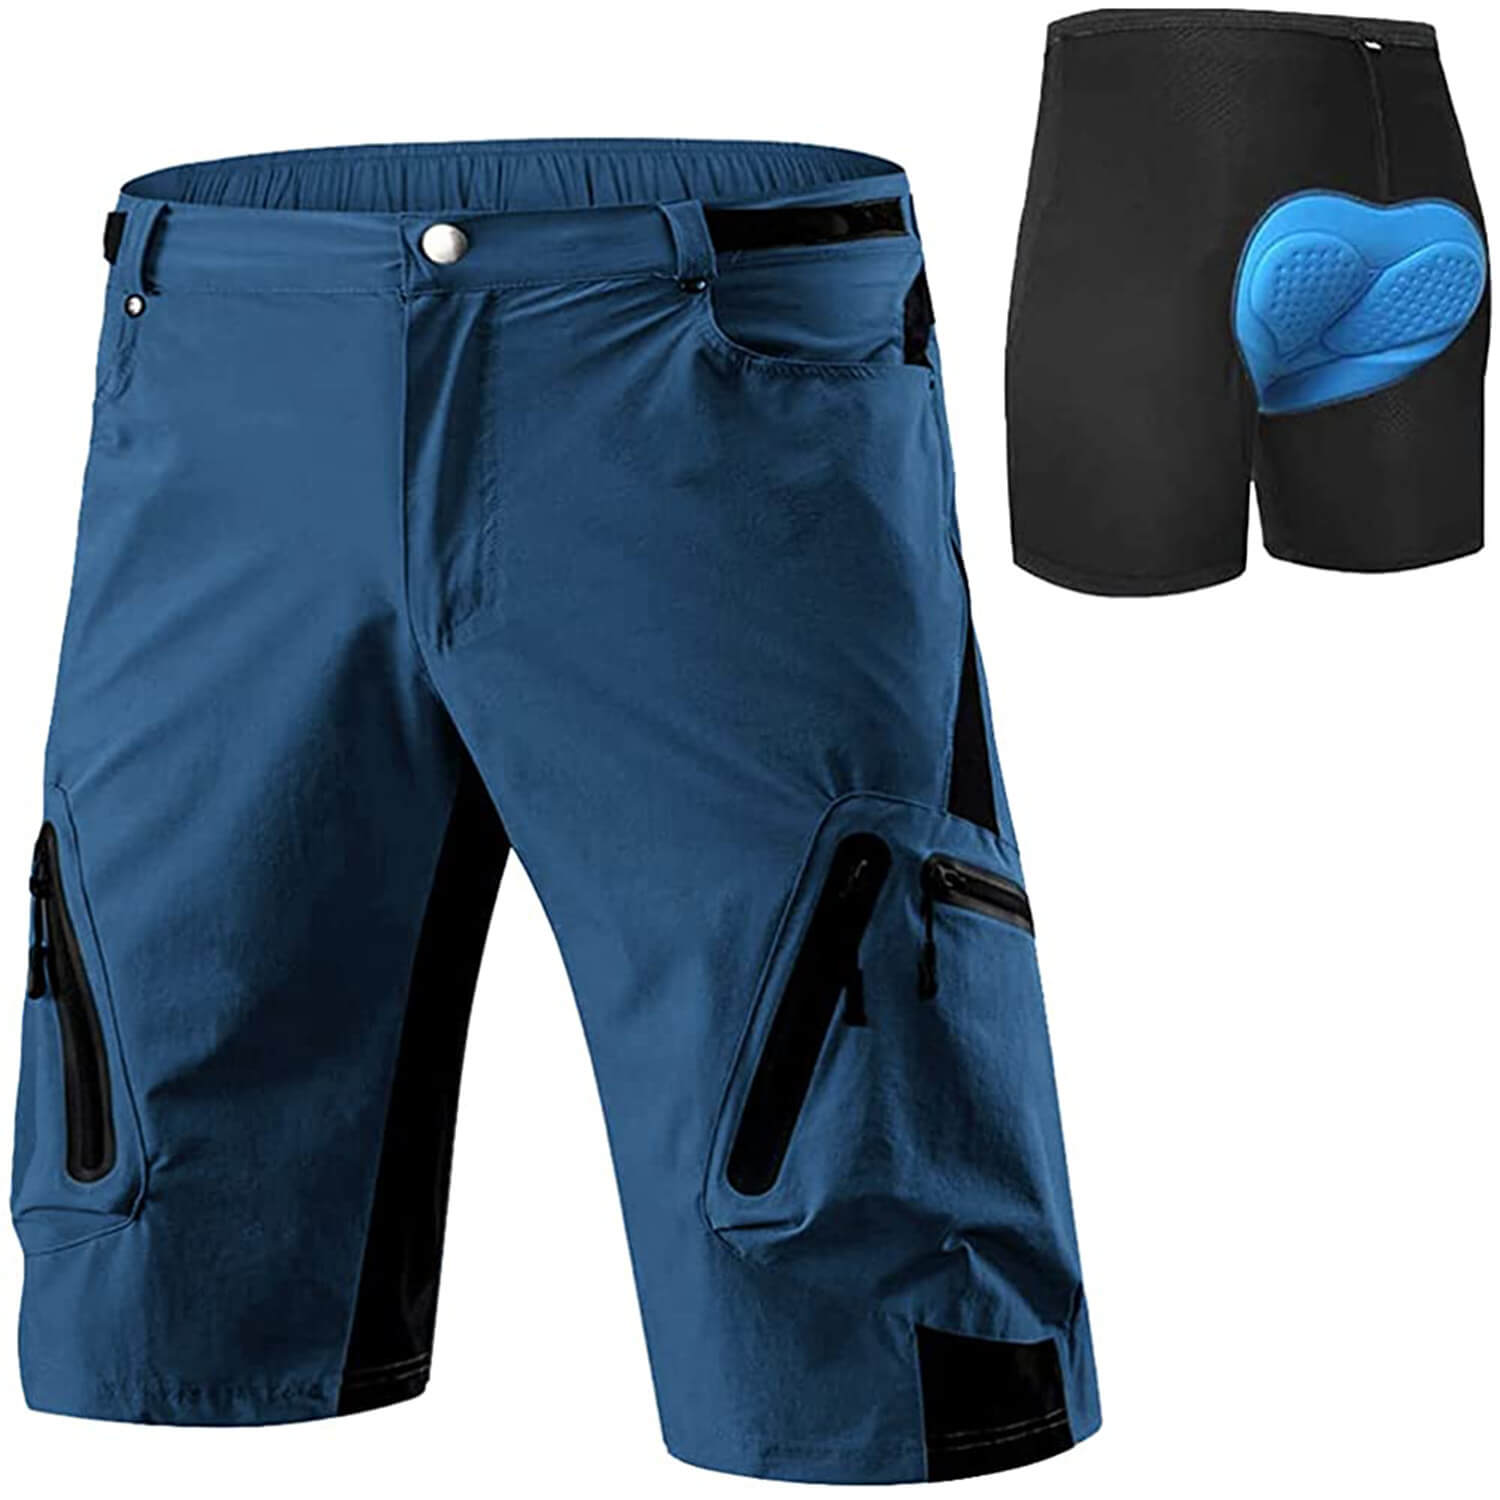 Men's Comfort Mountain Bike Shorts With Liner